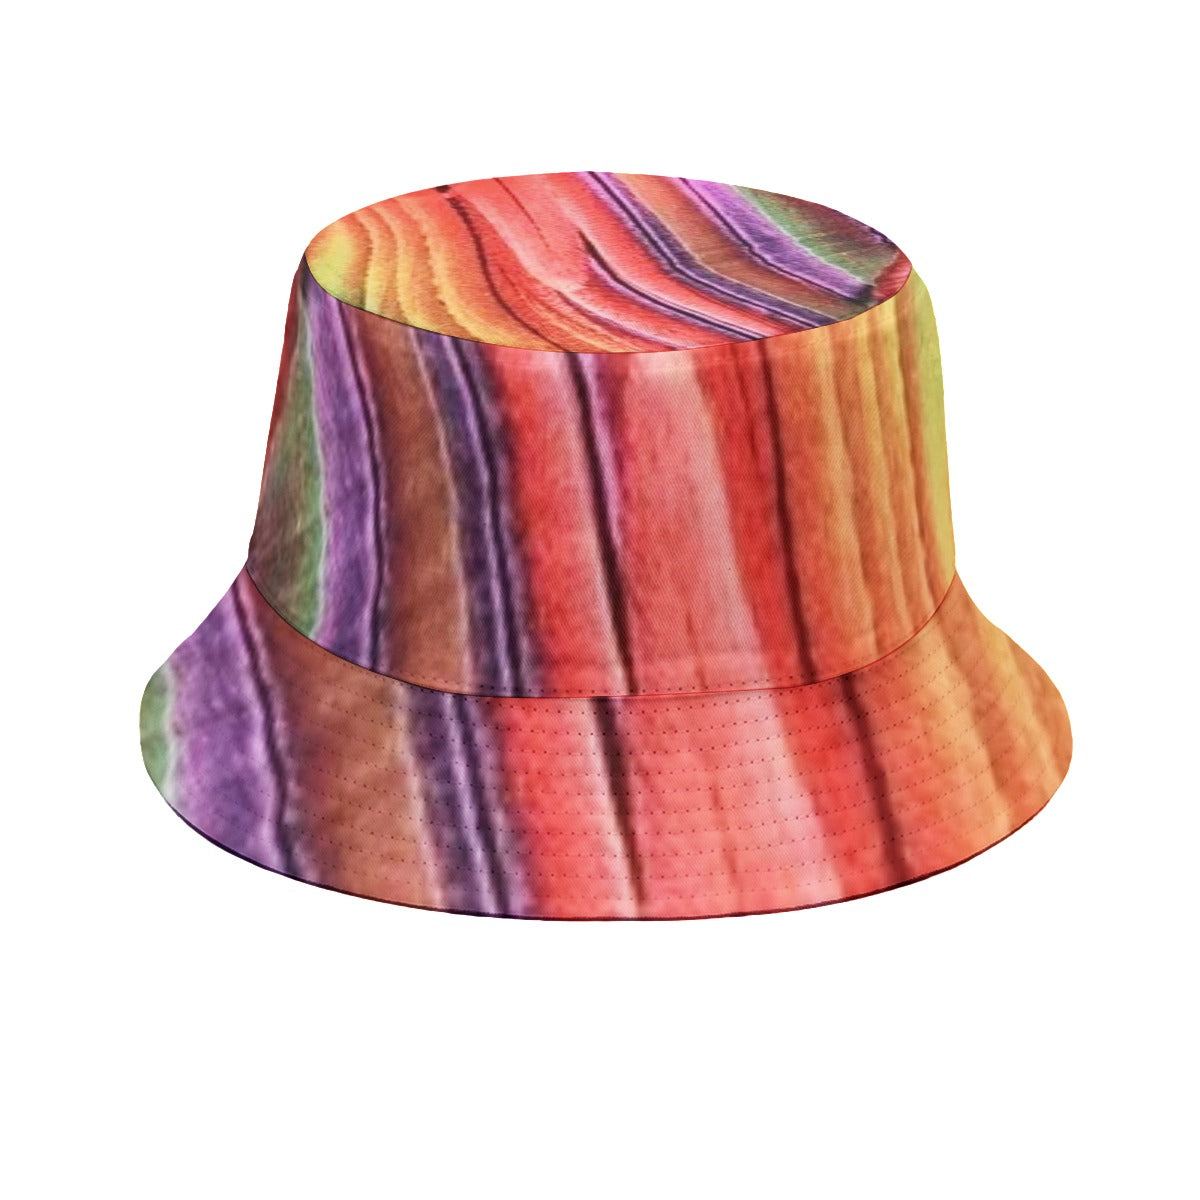 fisherman hat